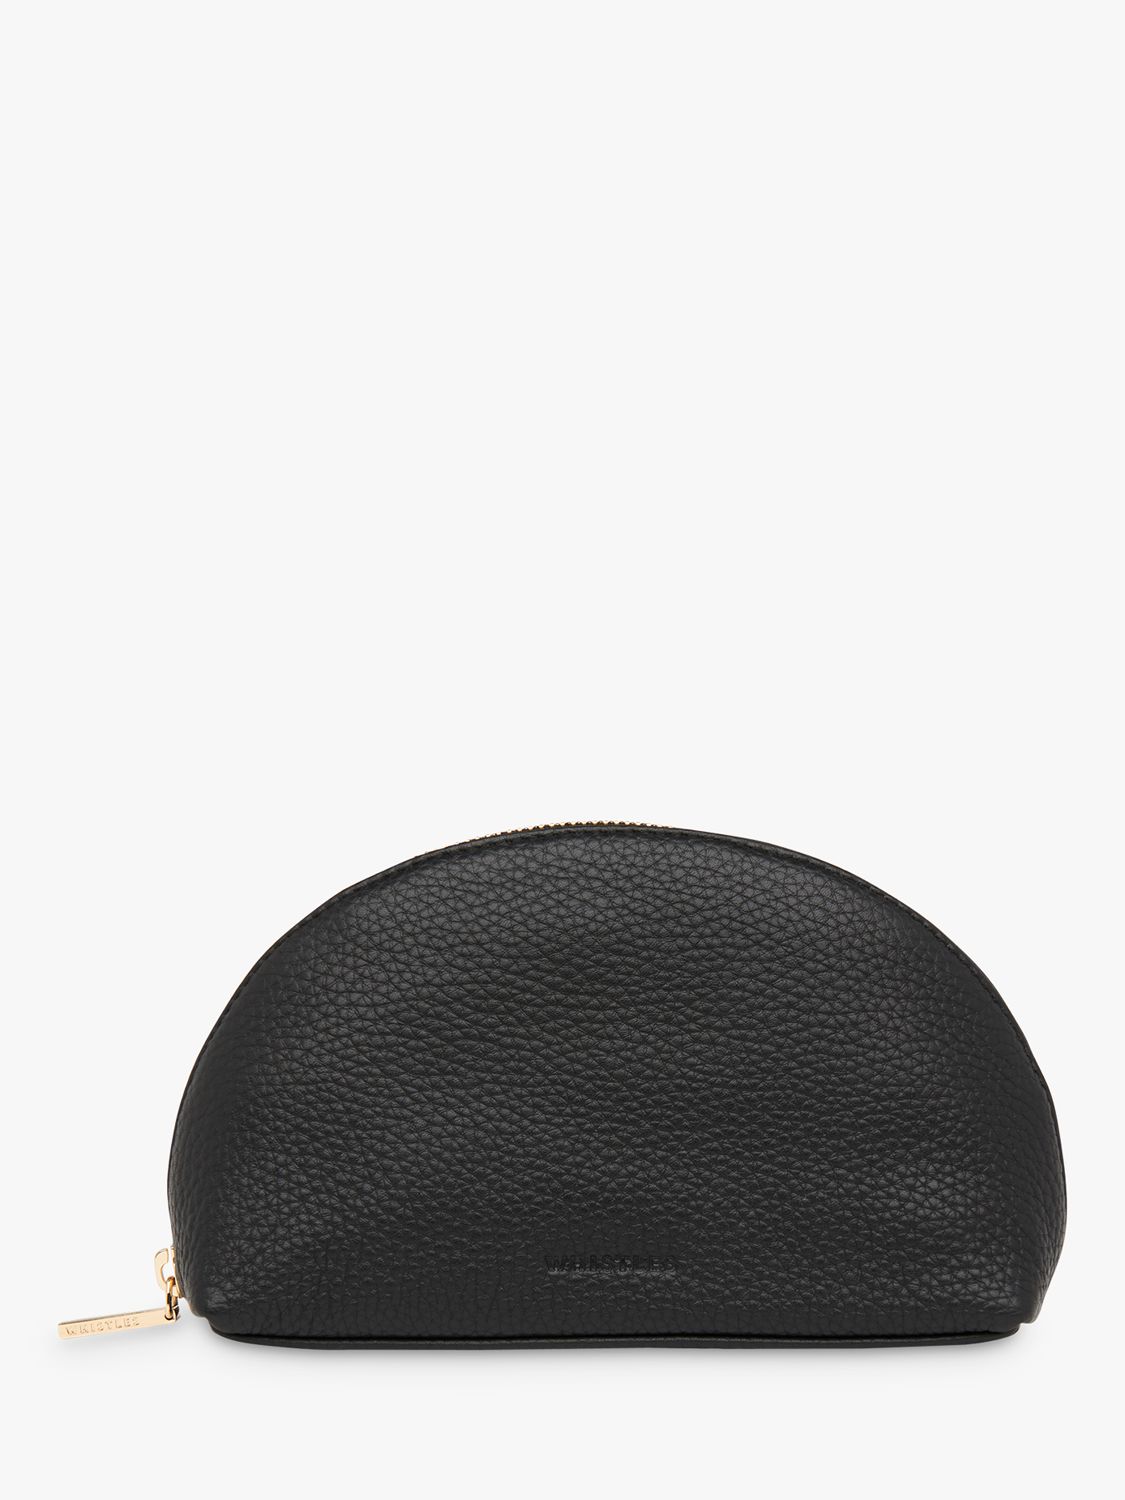 Whistles Nina Leather Make Up Bag, Black 1